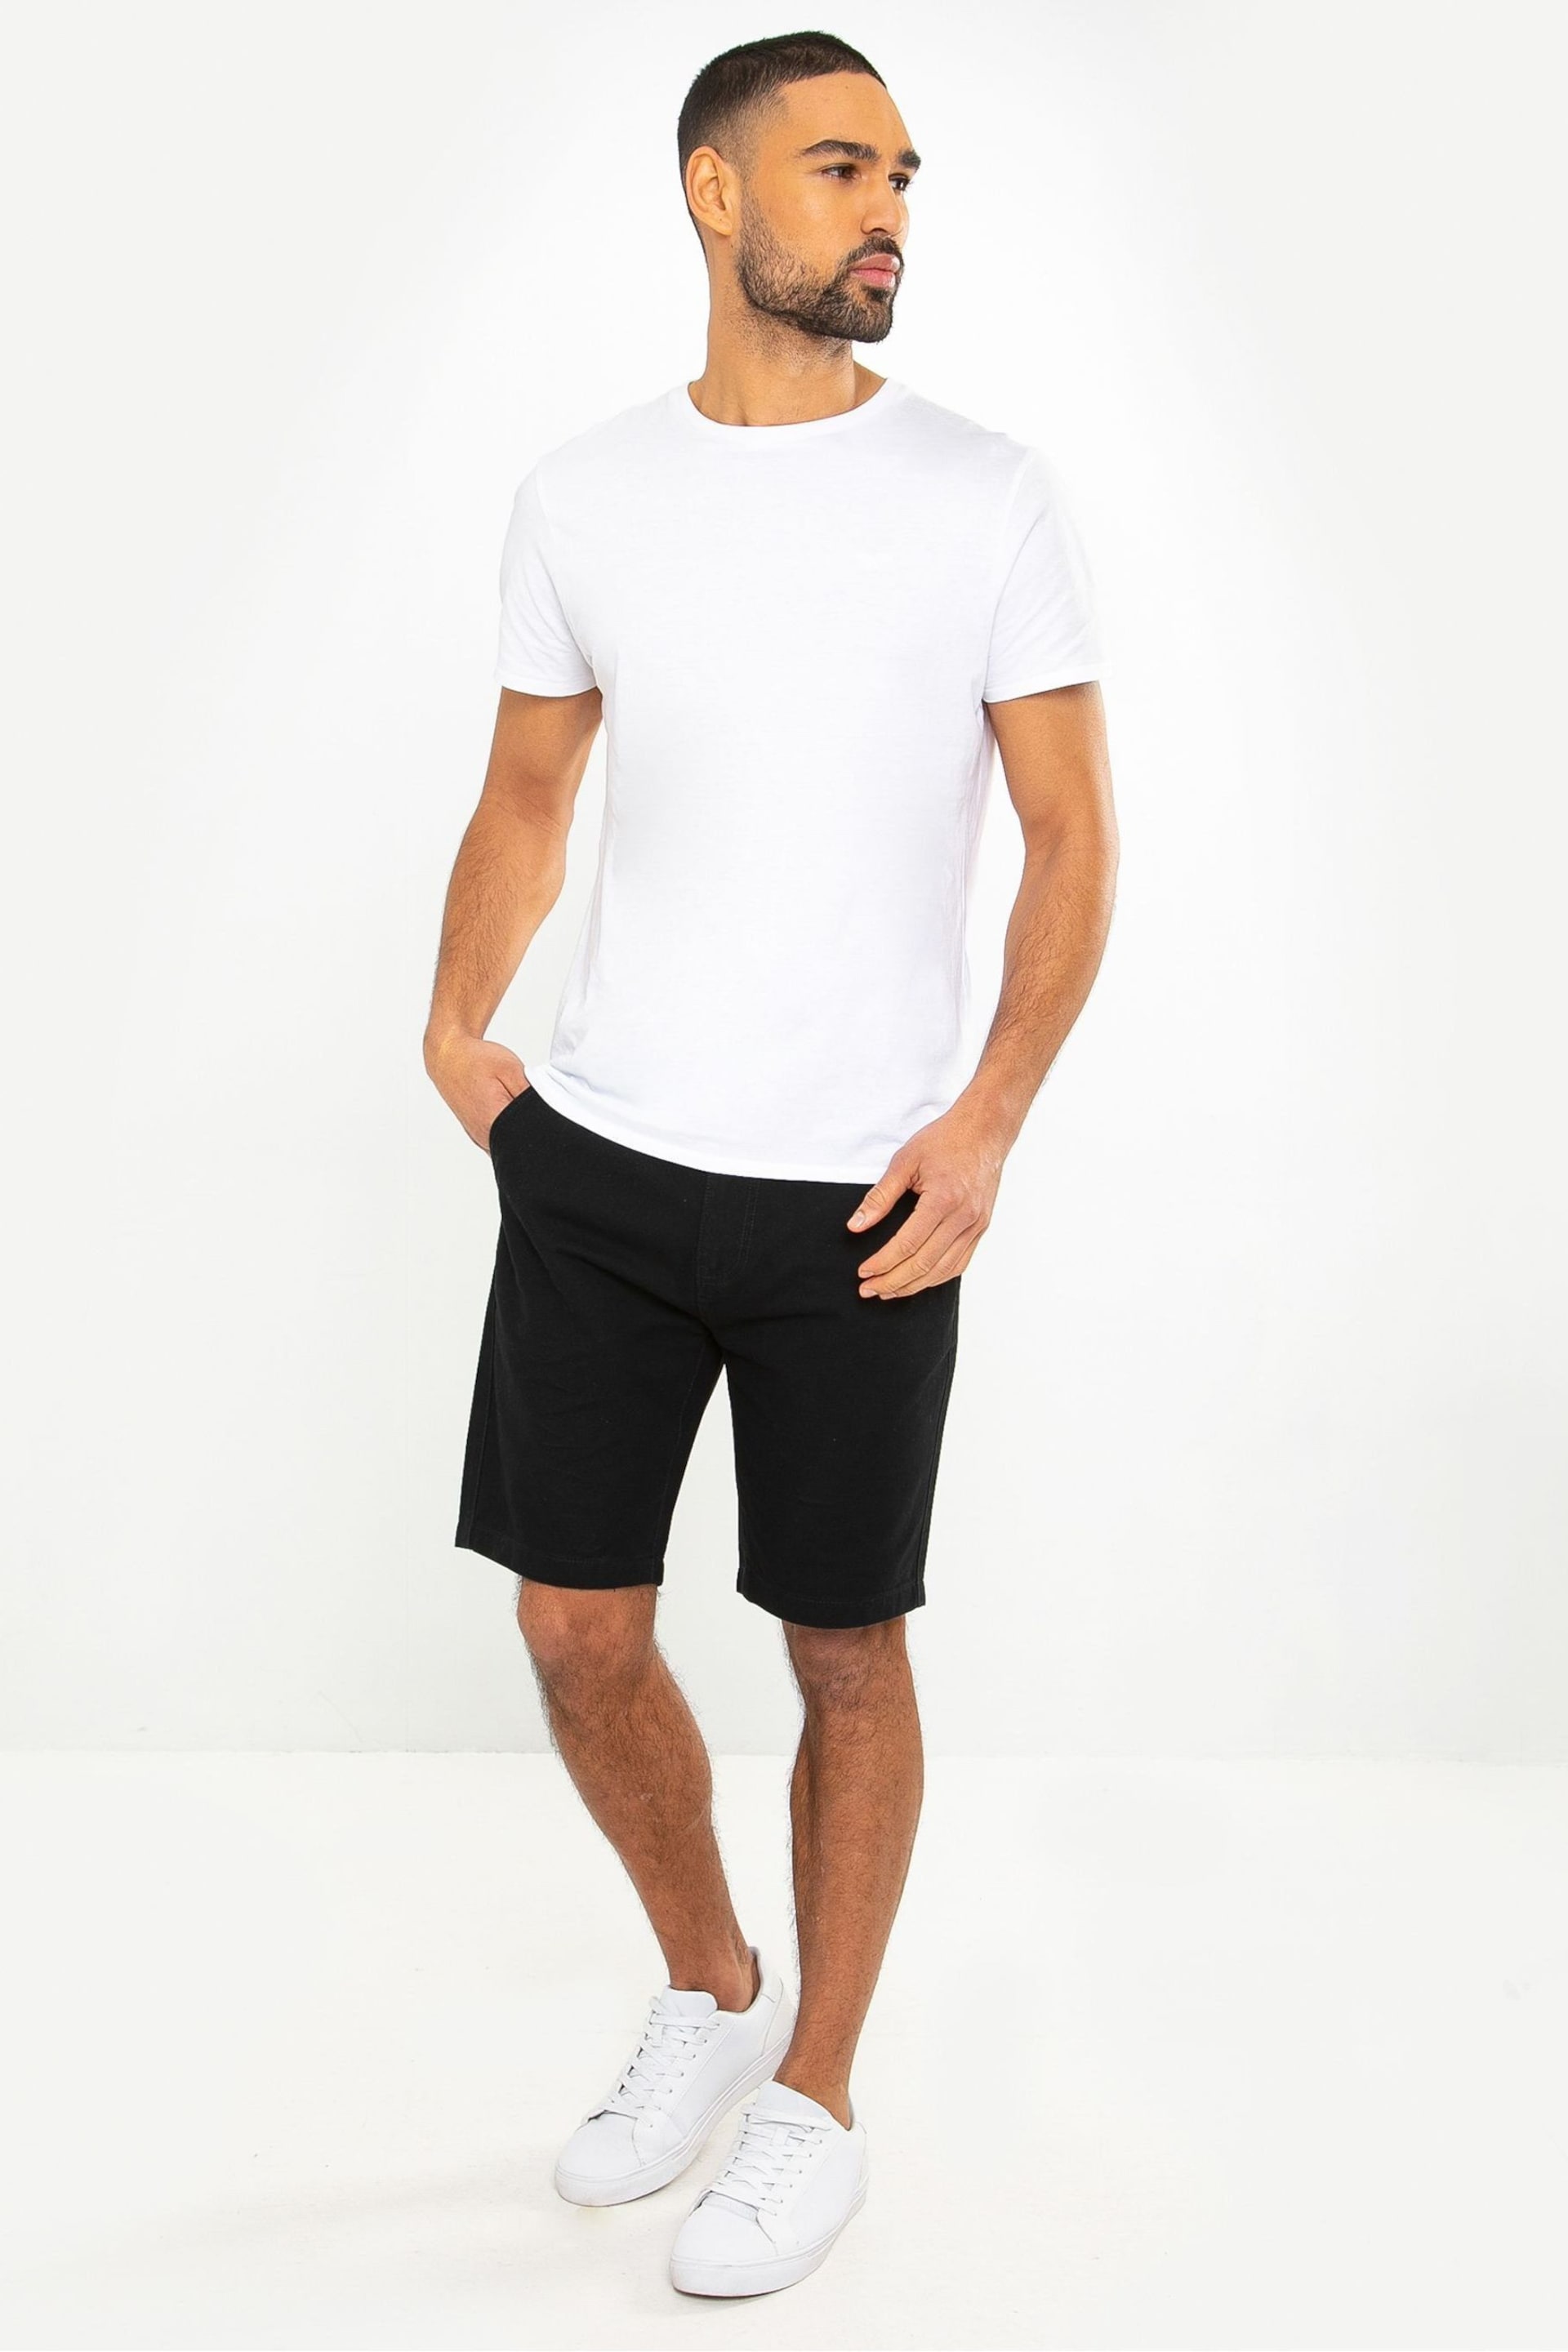 Threadbare Black Regular Fit Cotton Chinos Shorts - Image 3 of 4